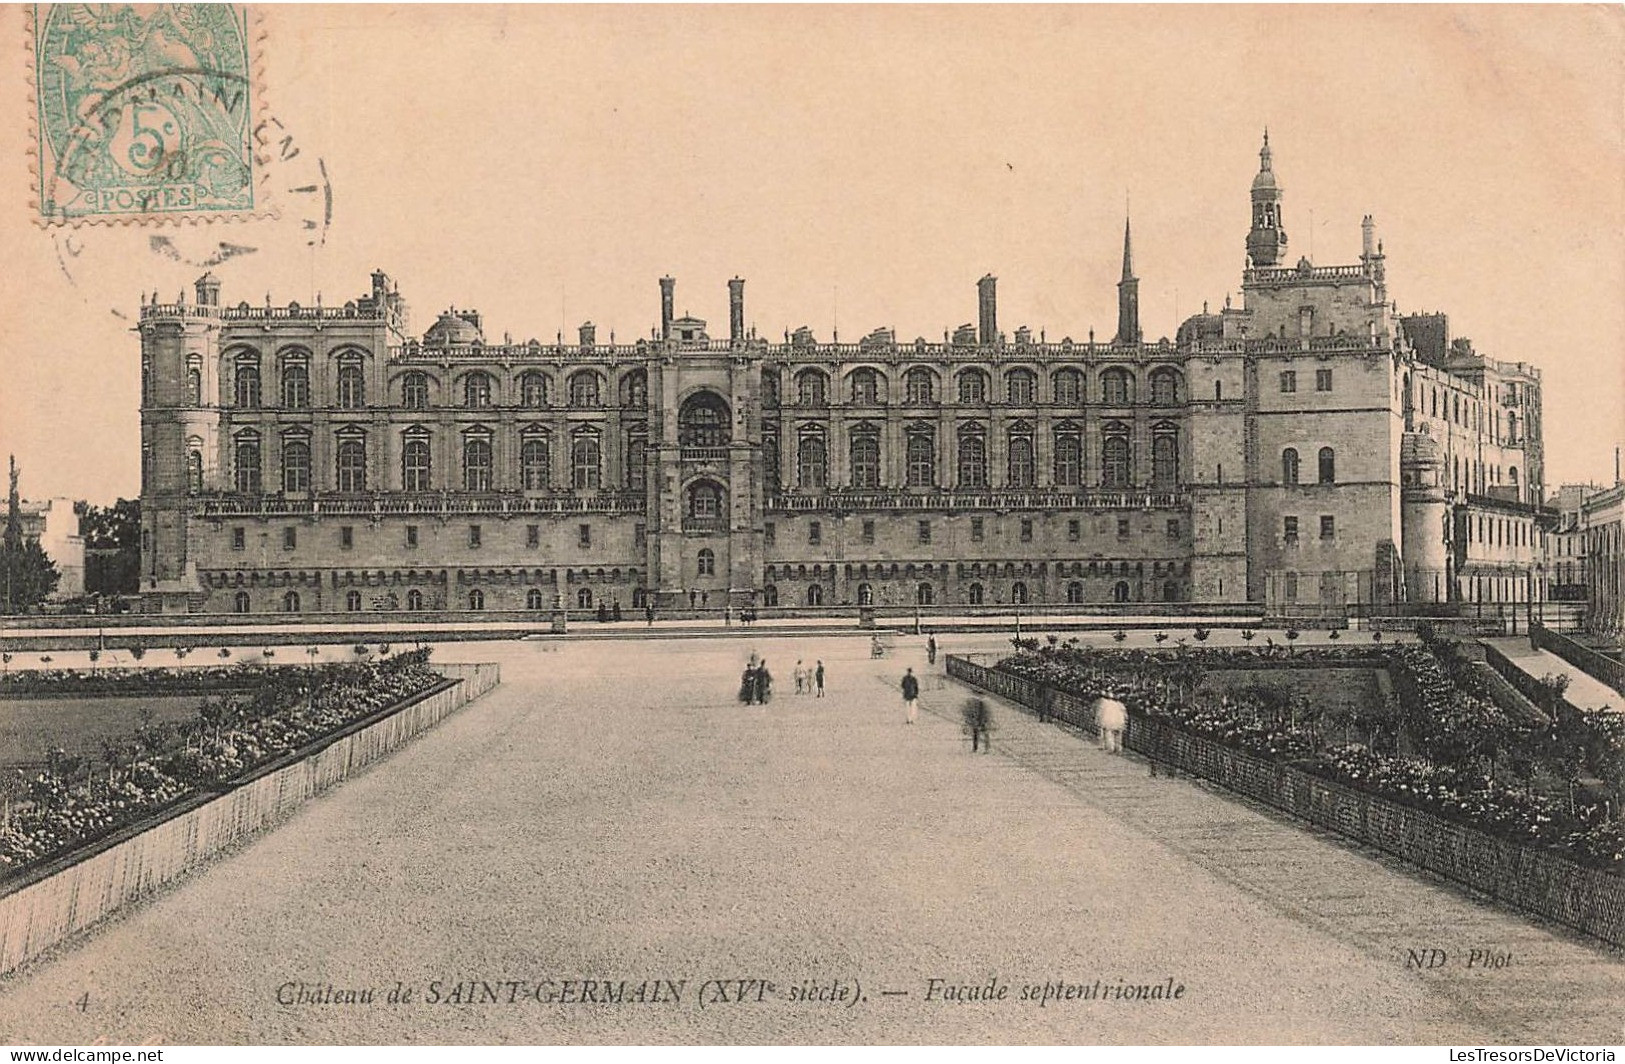 FRANCE - Château De Saint Germain (XVIè Siècle) - Façade Septentoriale - Animé - Carte Postale Ancienne - St. Germain En Laye (Kasteel)